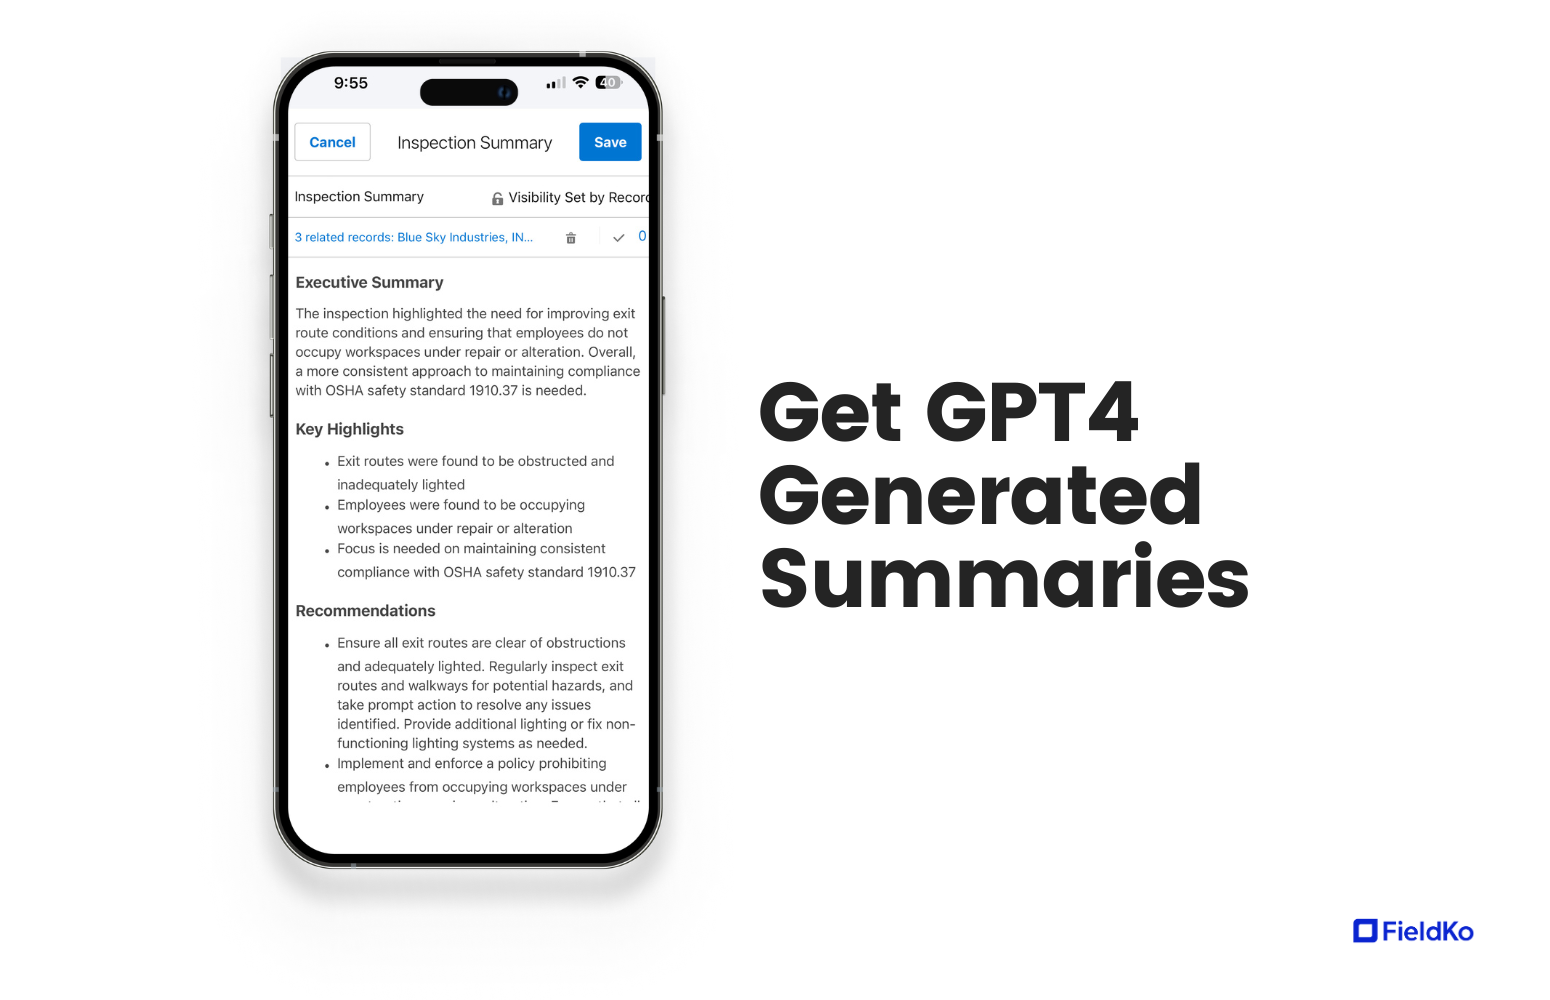 Get GPT4 Generated Summaries